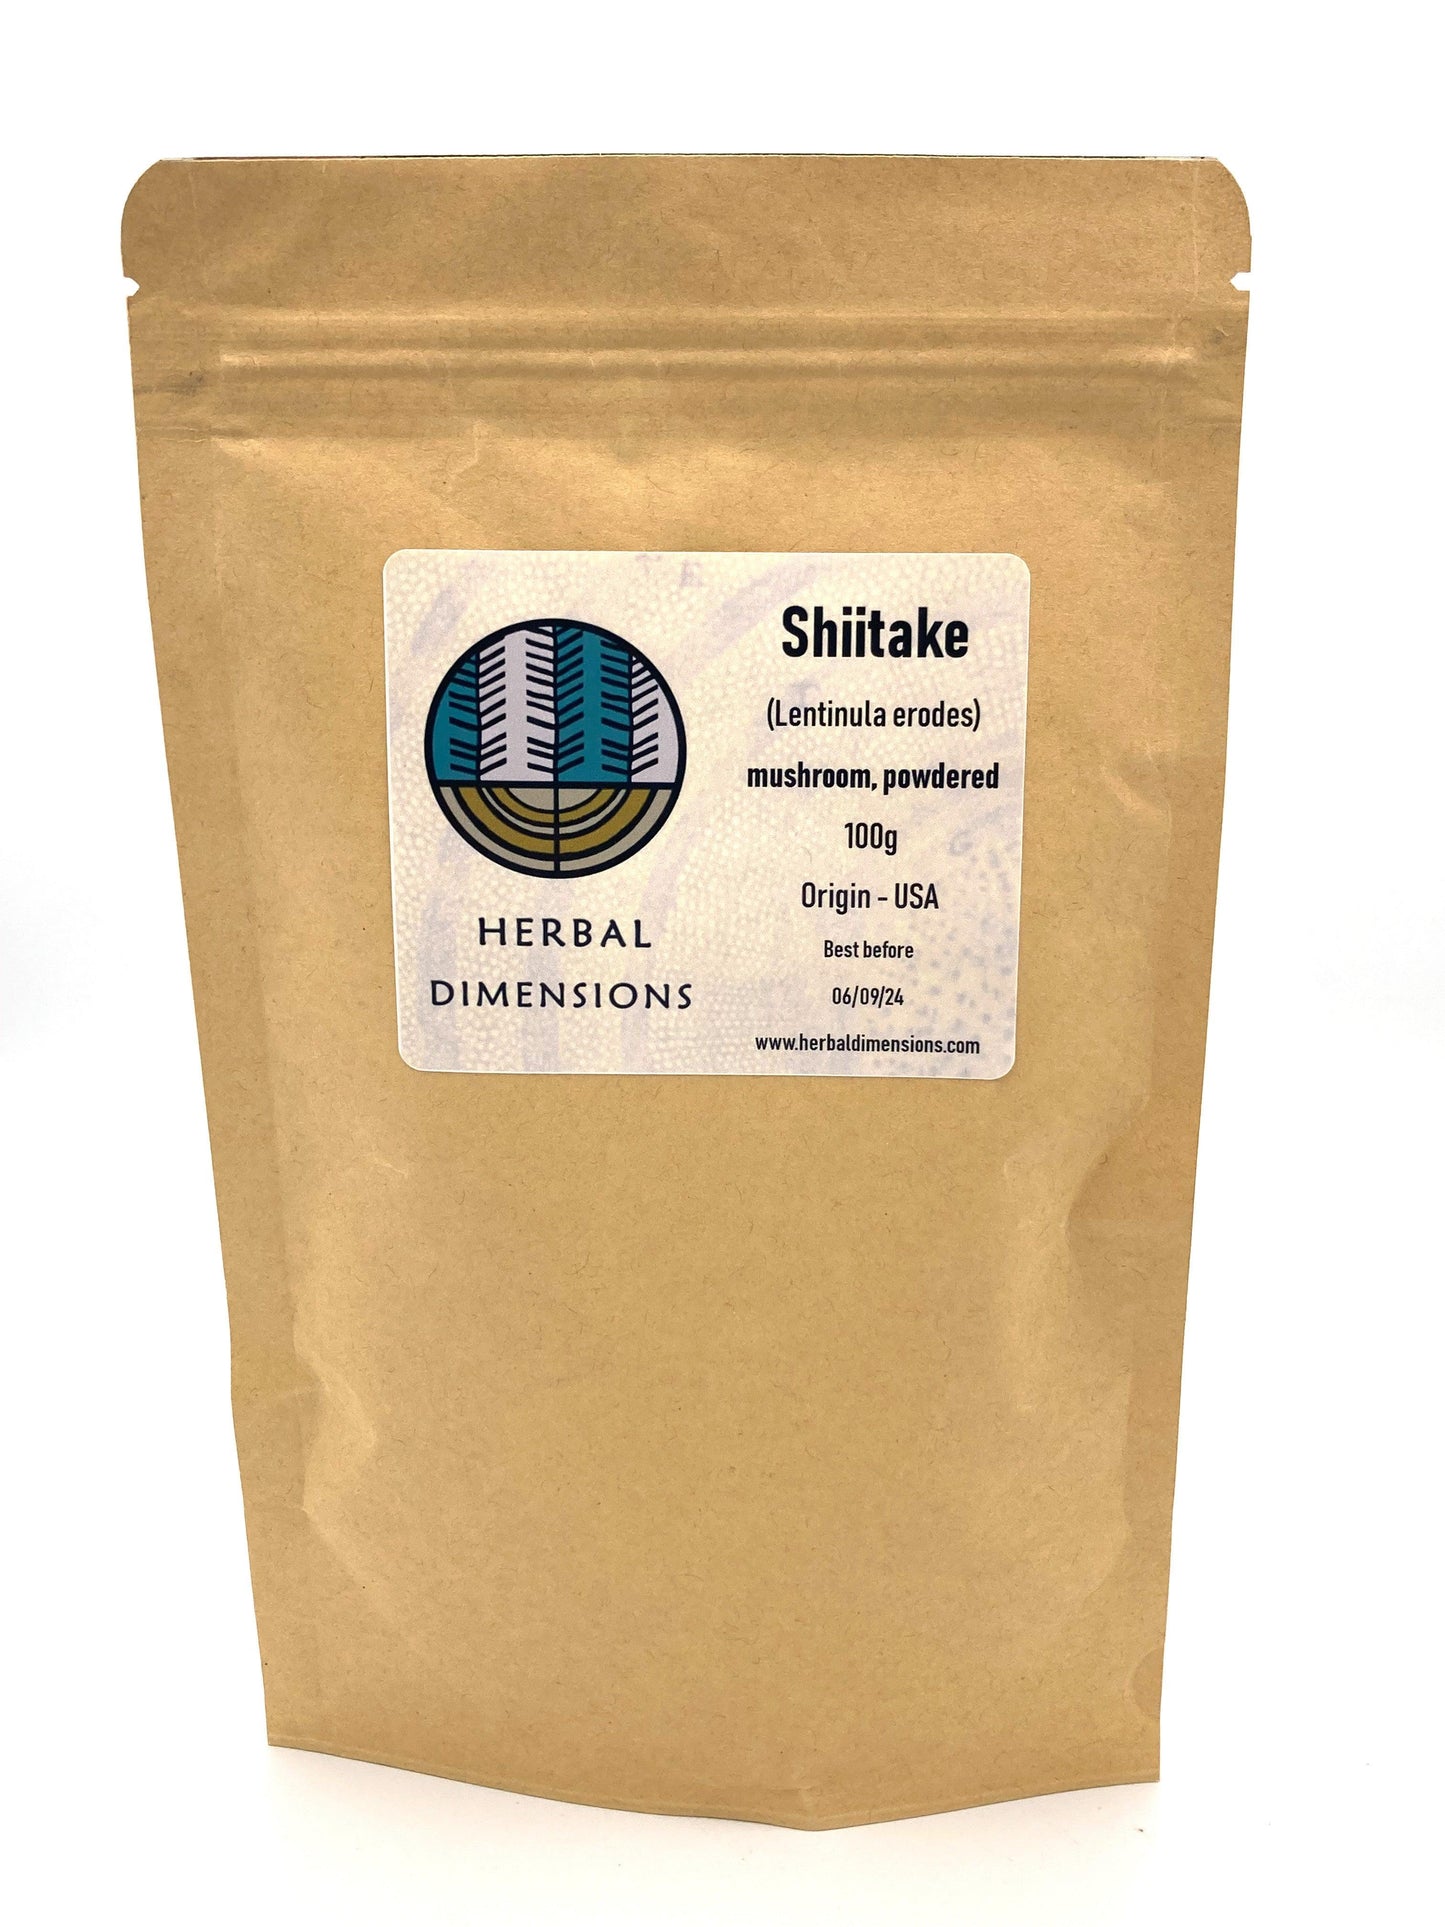 Shiitake in a packet